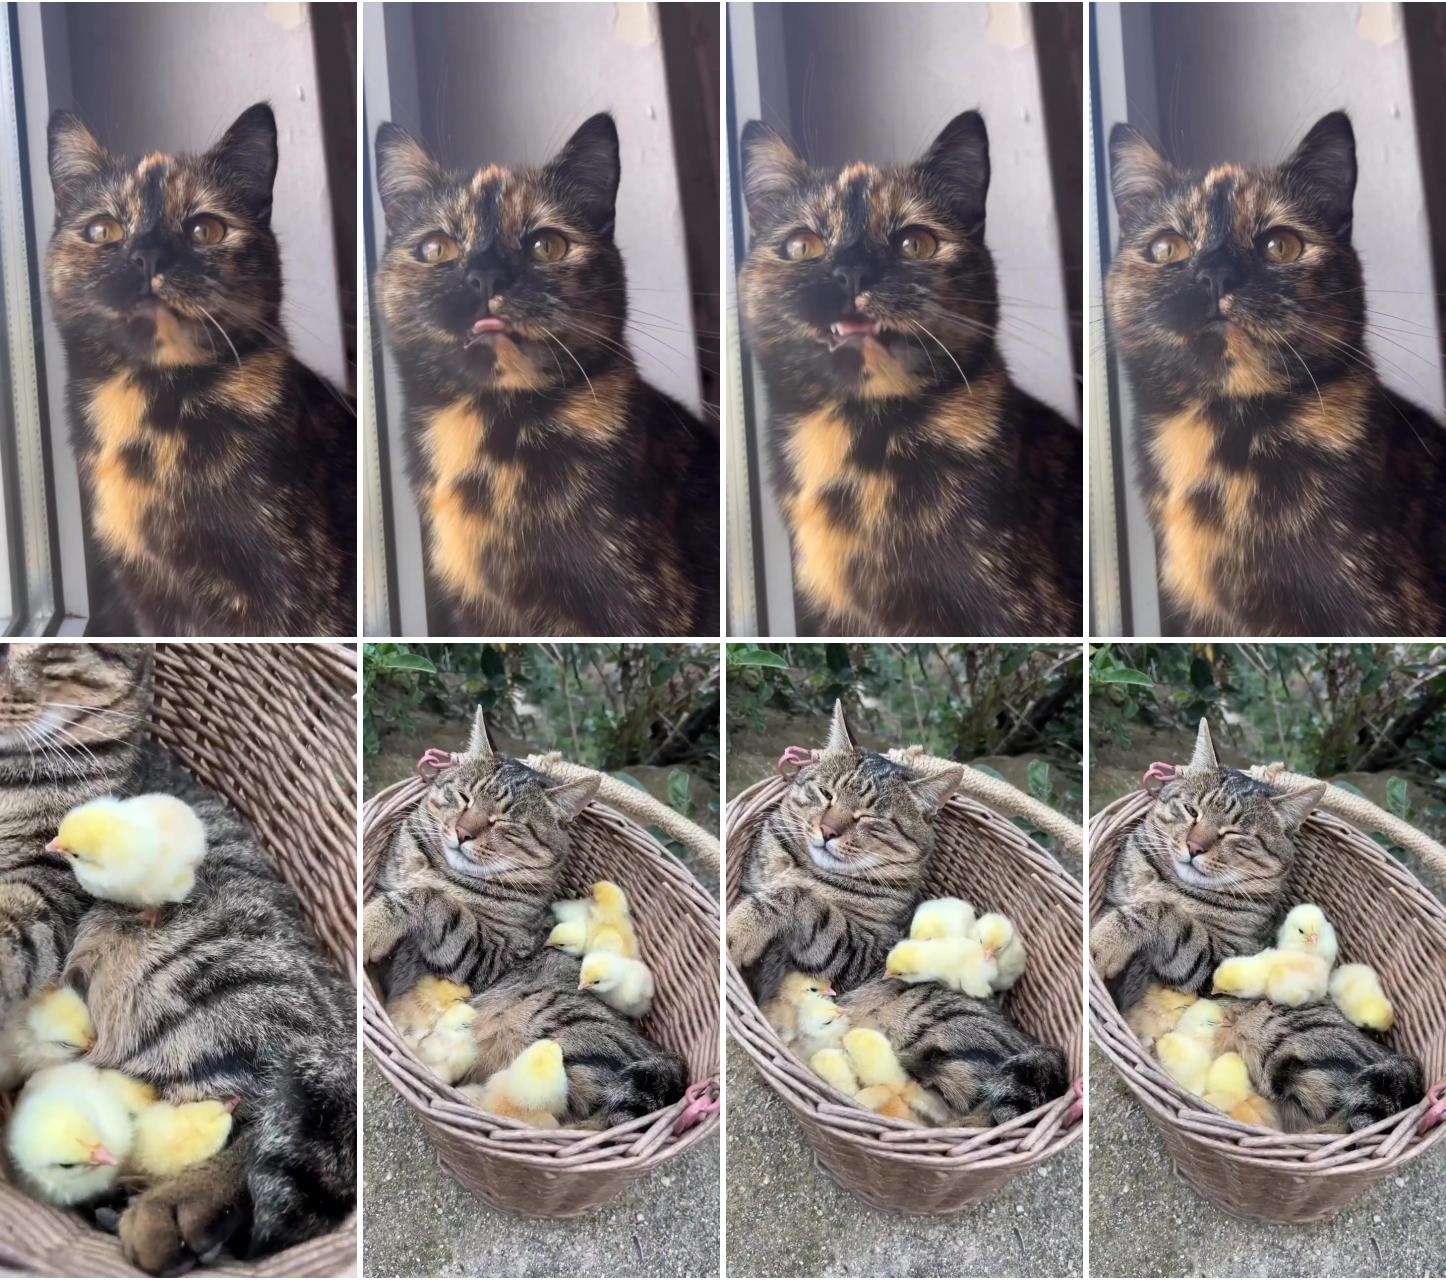 Tt ekekekkekkek / tortie cat with the cutest meow / funny talking cat / tortoiseshell cat videos; cute animals